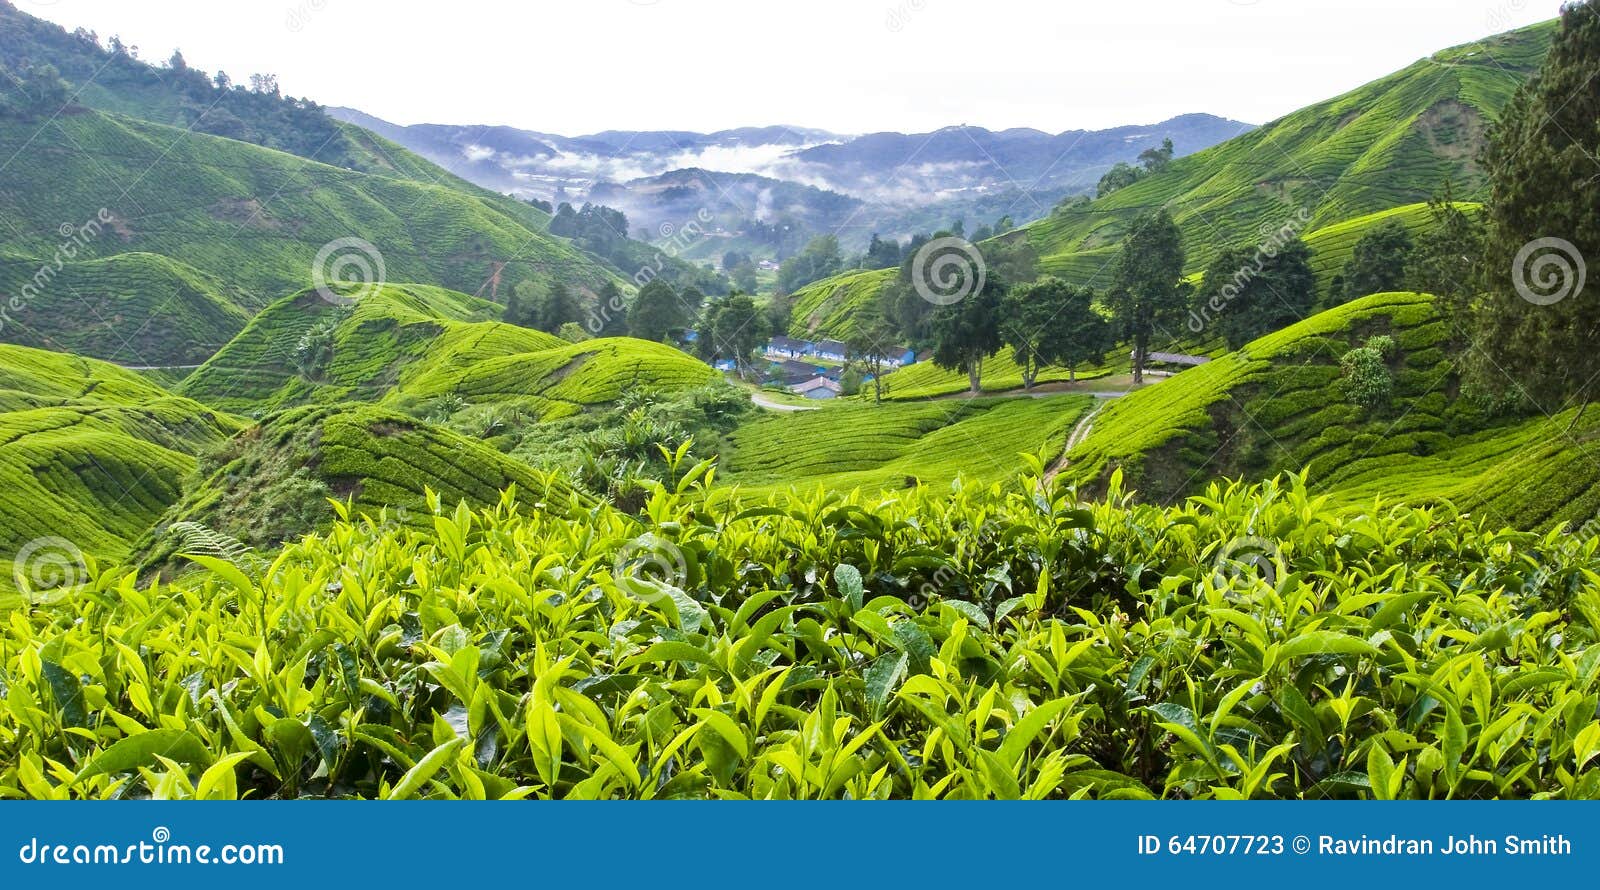 boh tea plantation, cameron highlands, pahang, malaysia.